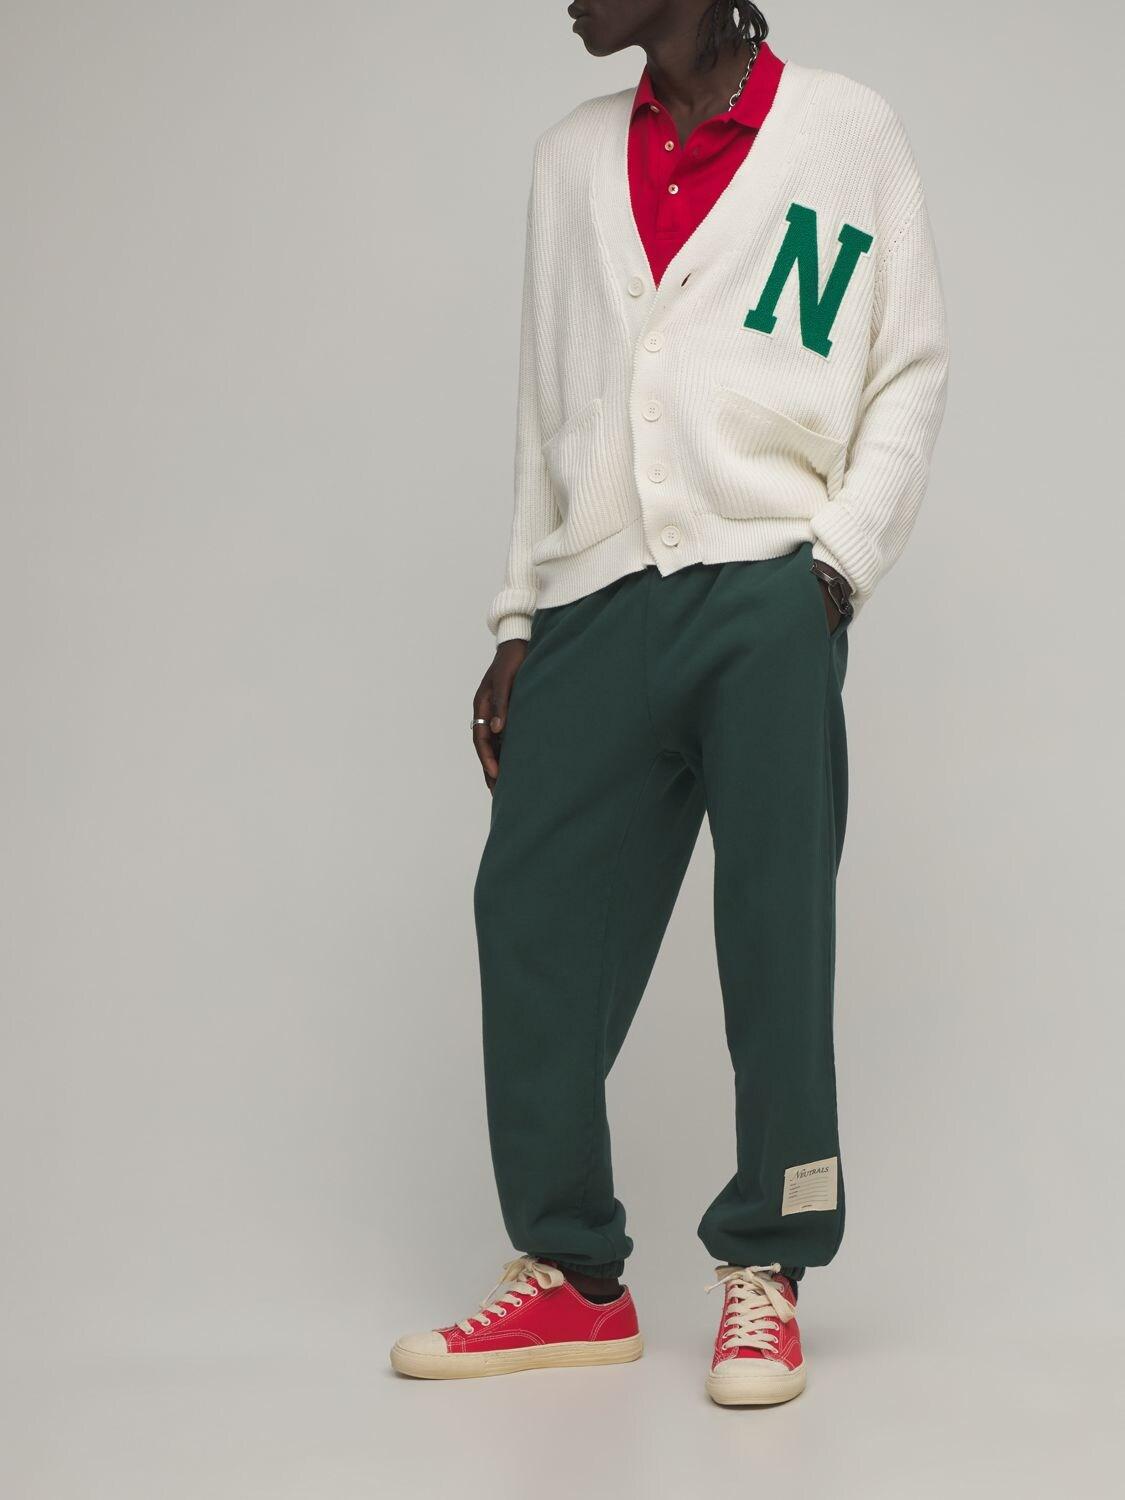 Jaded London Neutrals Cotton Sweatpants in Green for Men - Lyst